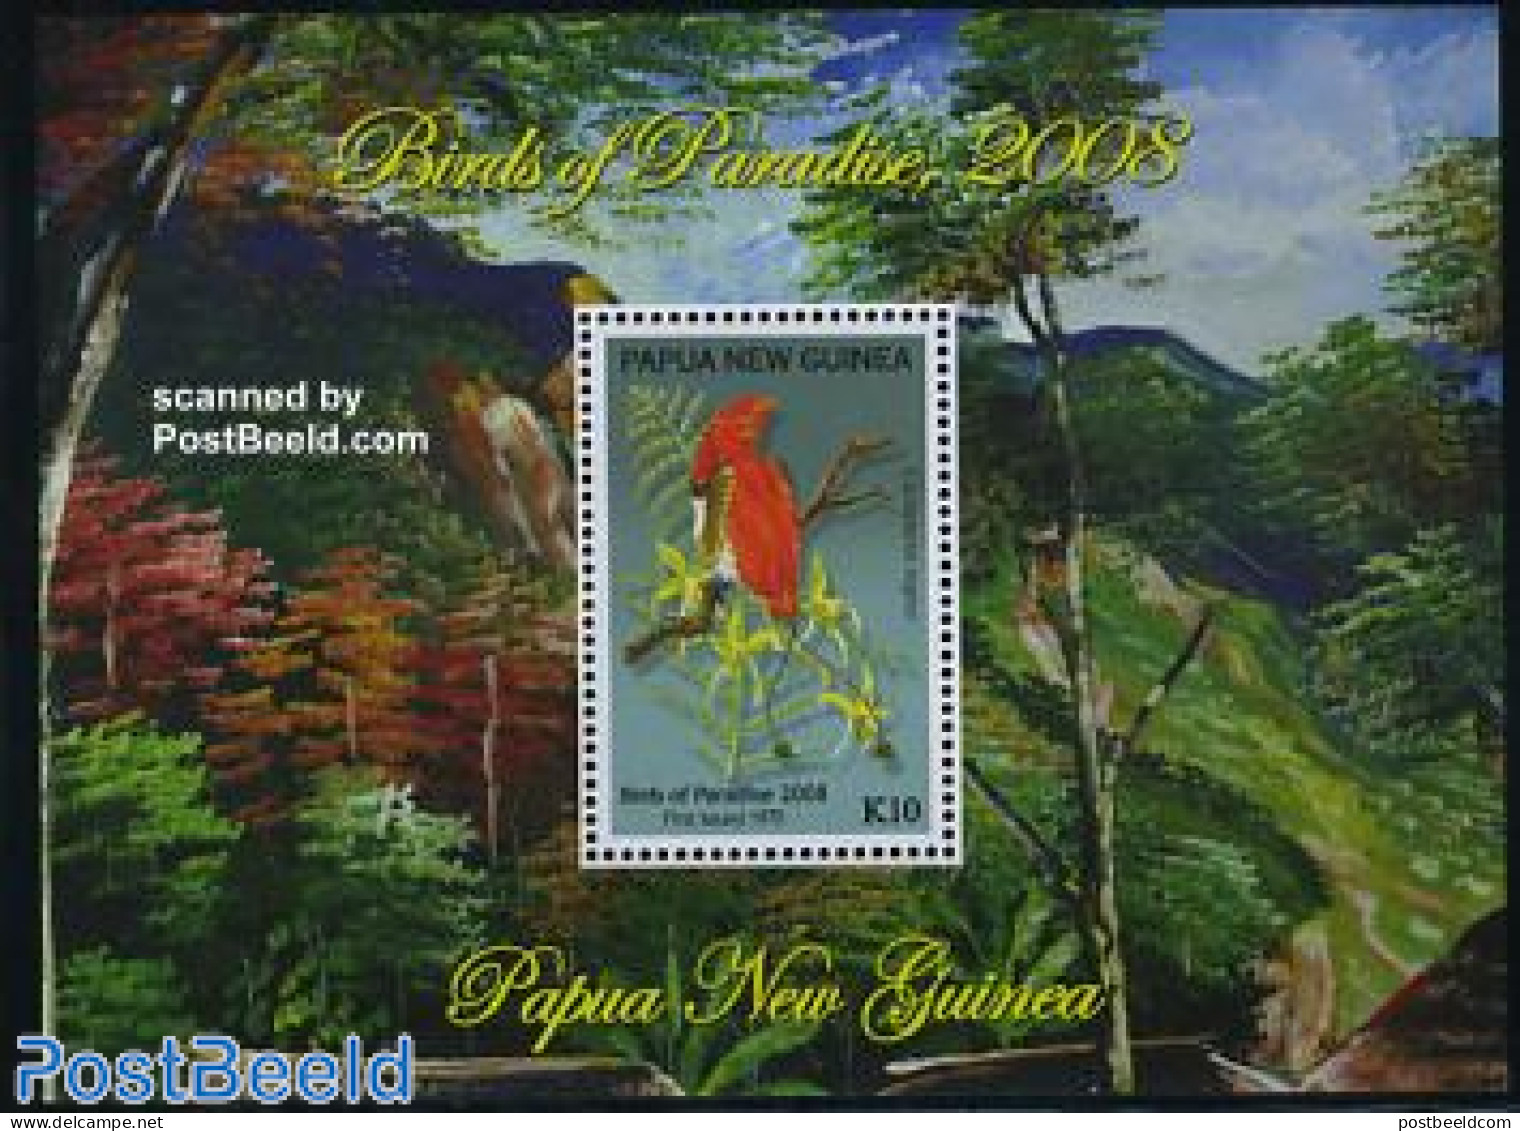 Papua New Guinea 2008 Paradise Birds S/s, Mint NH, Nature - Birds - Papua New Guinea